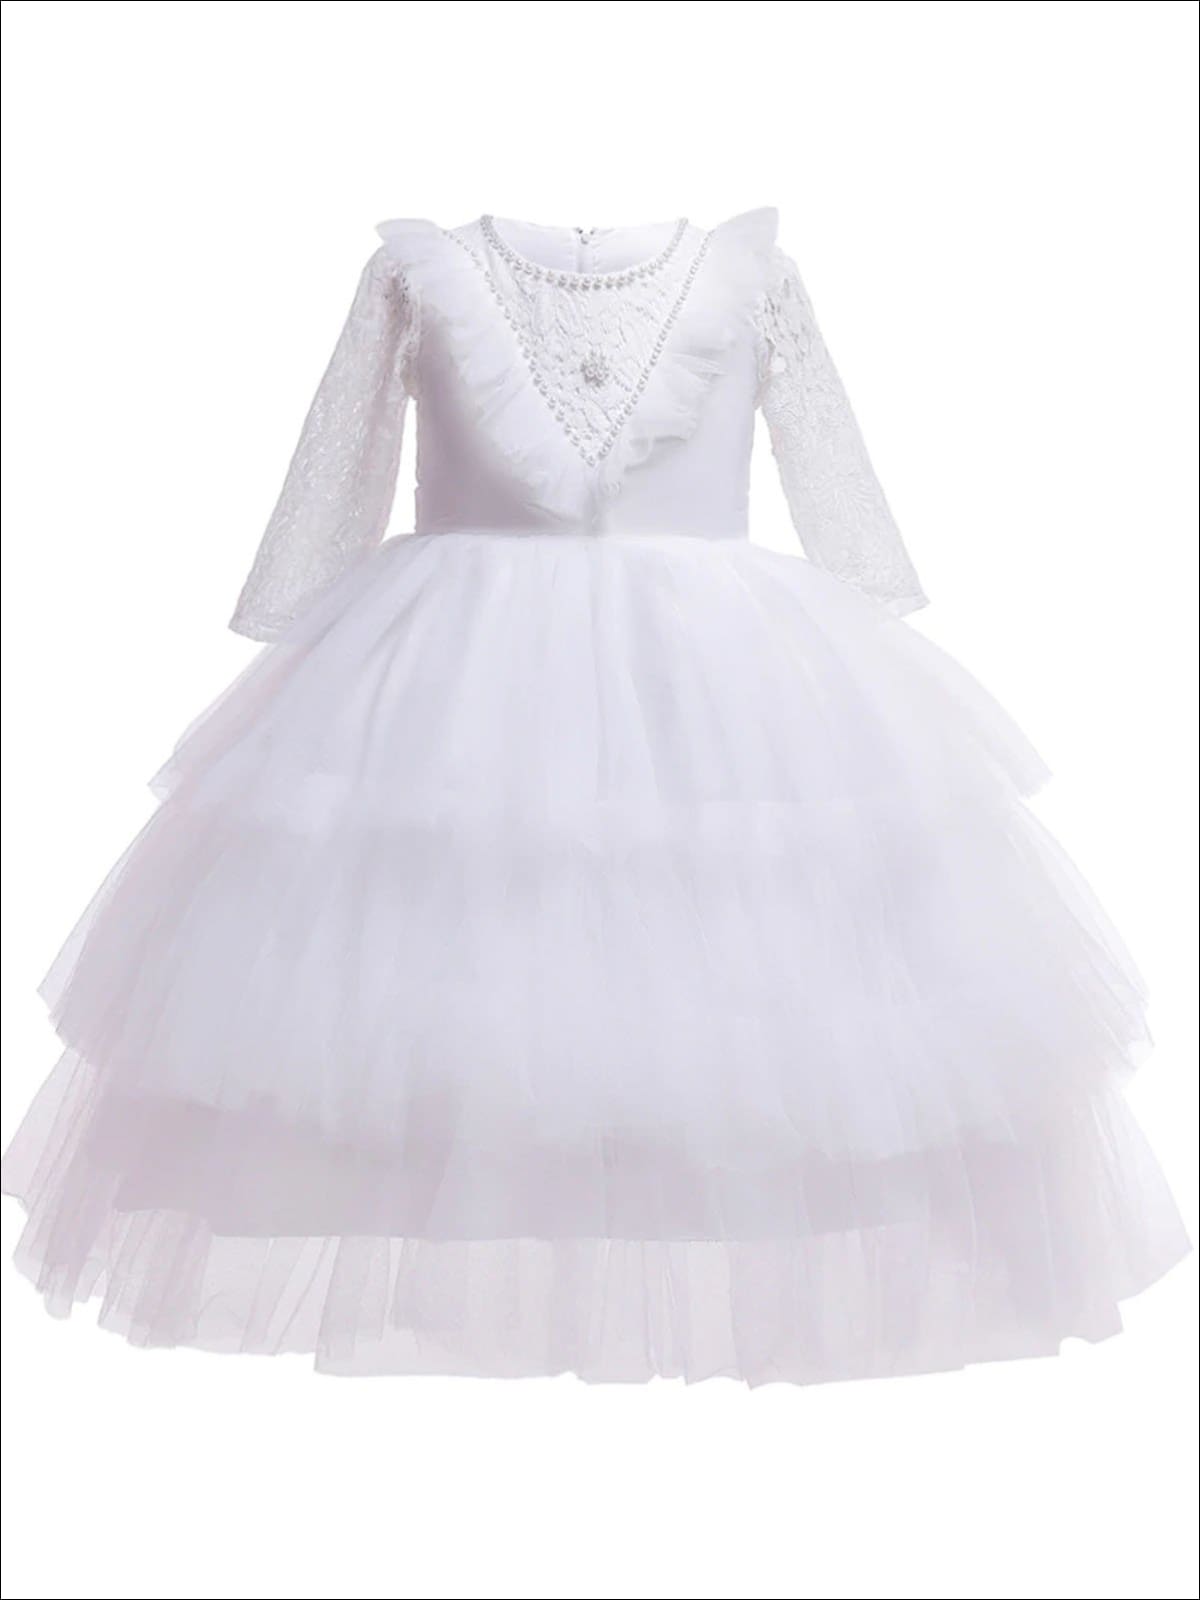 Girls Tiered Embellished Lace Dress - White / 2T - Girls Spring Dressy Dress